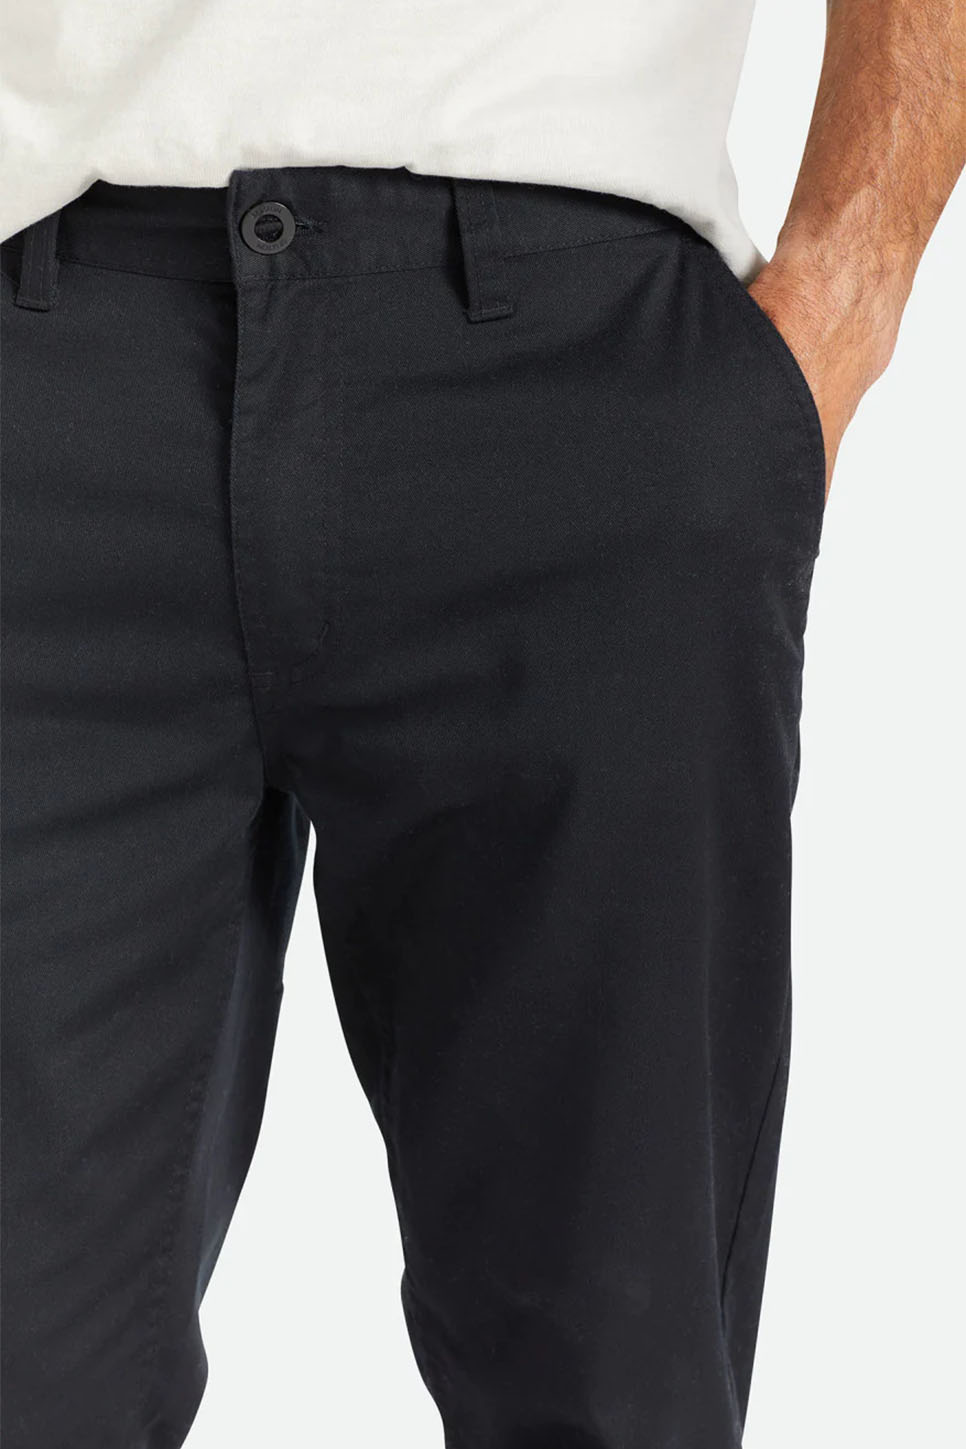 Brixton - Choice Chino Regular Pant - Black - Detail